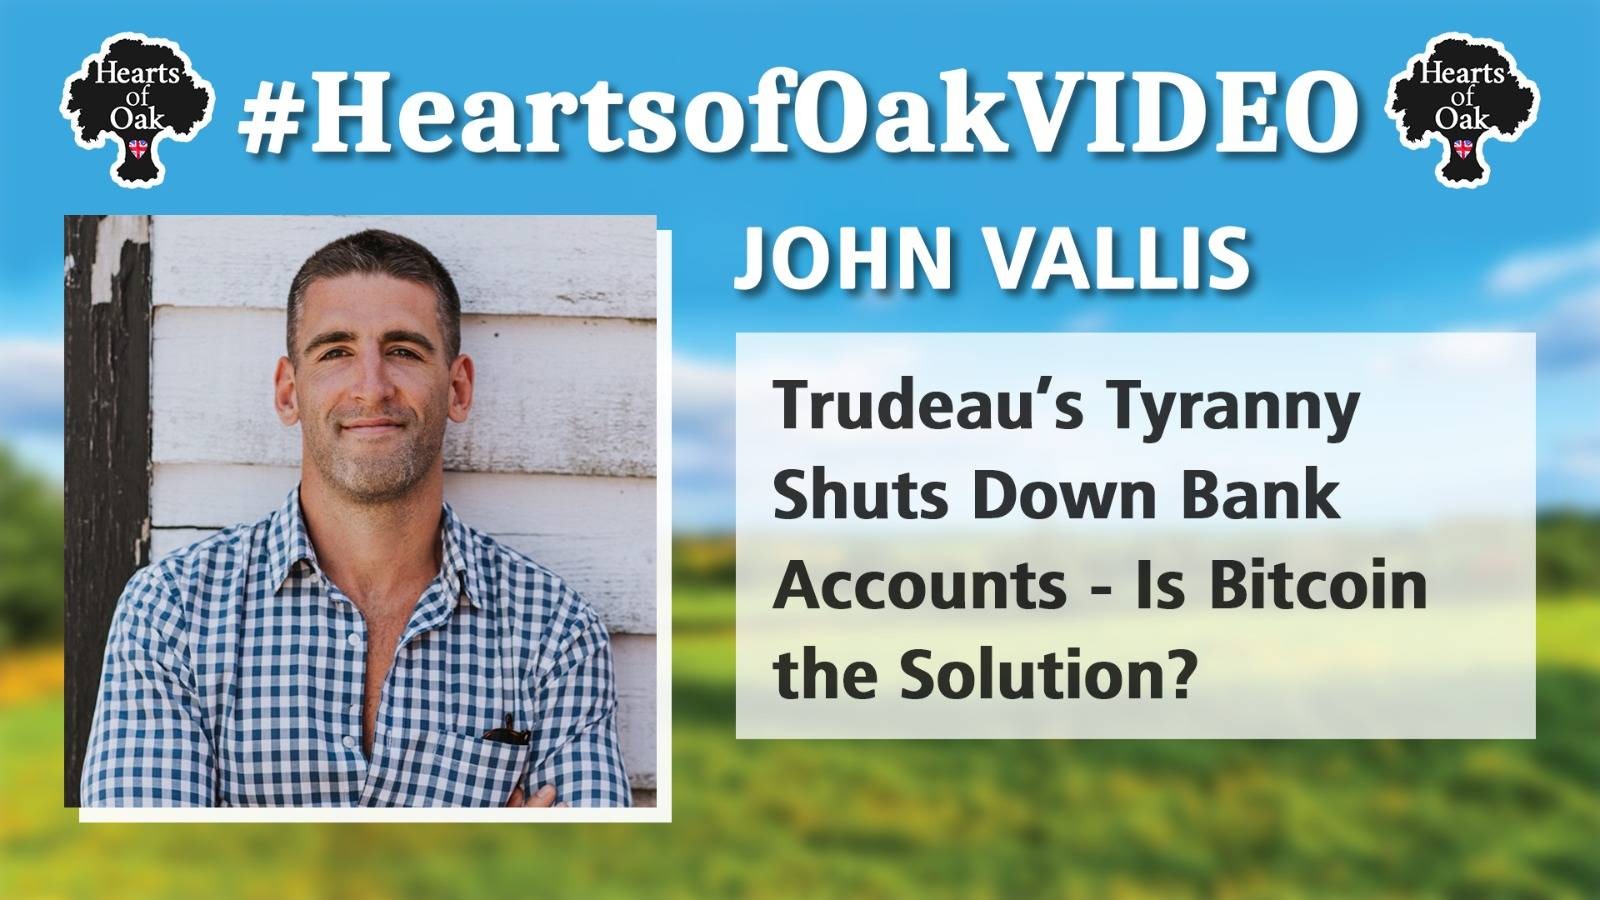 John Vallis - Trudeau's Tyranny Shuts Down Bank Accounts - Is Bitcoin the Solution?